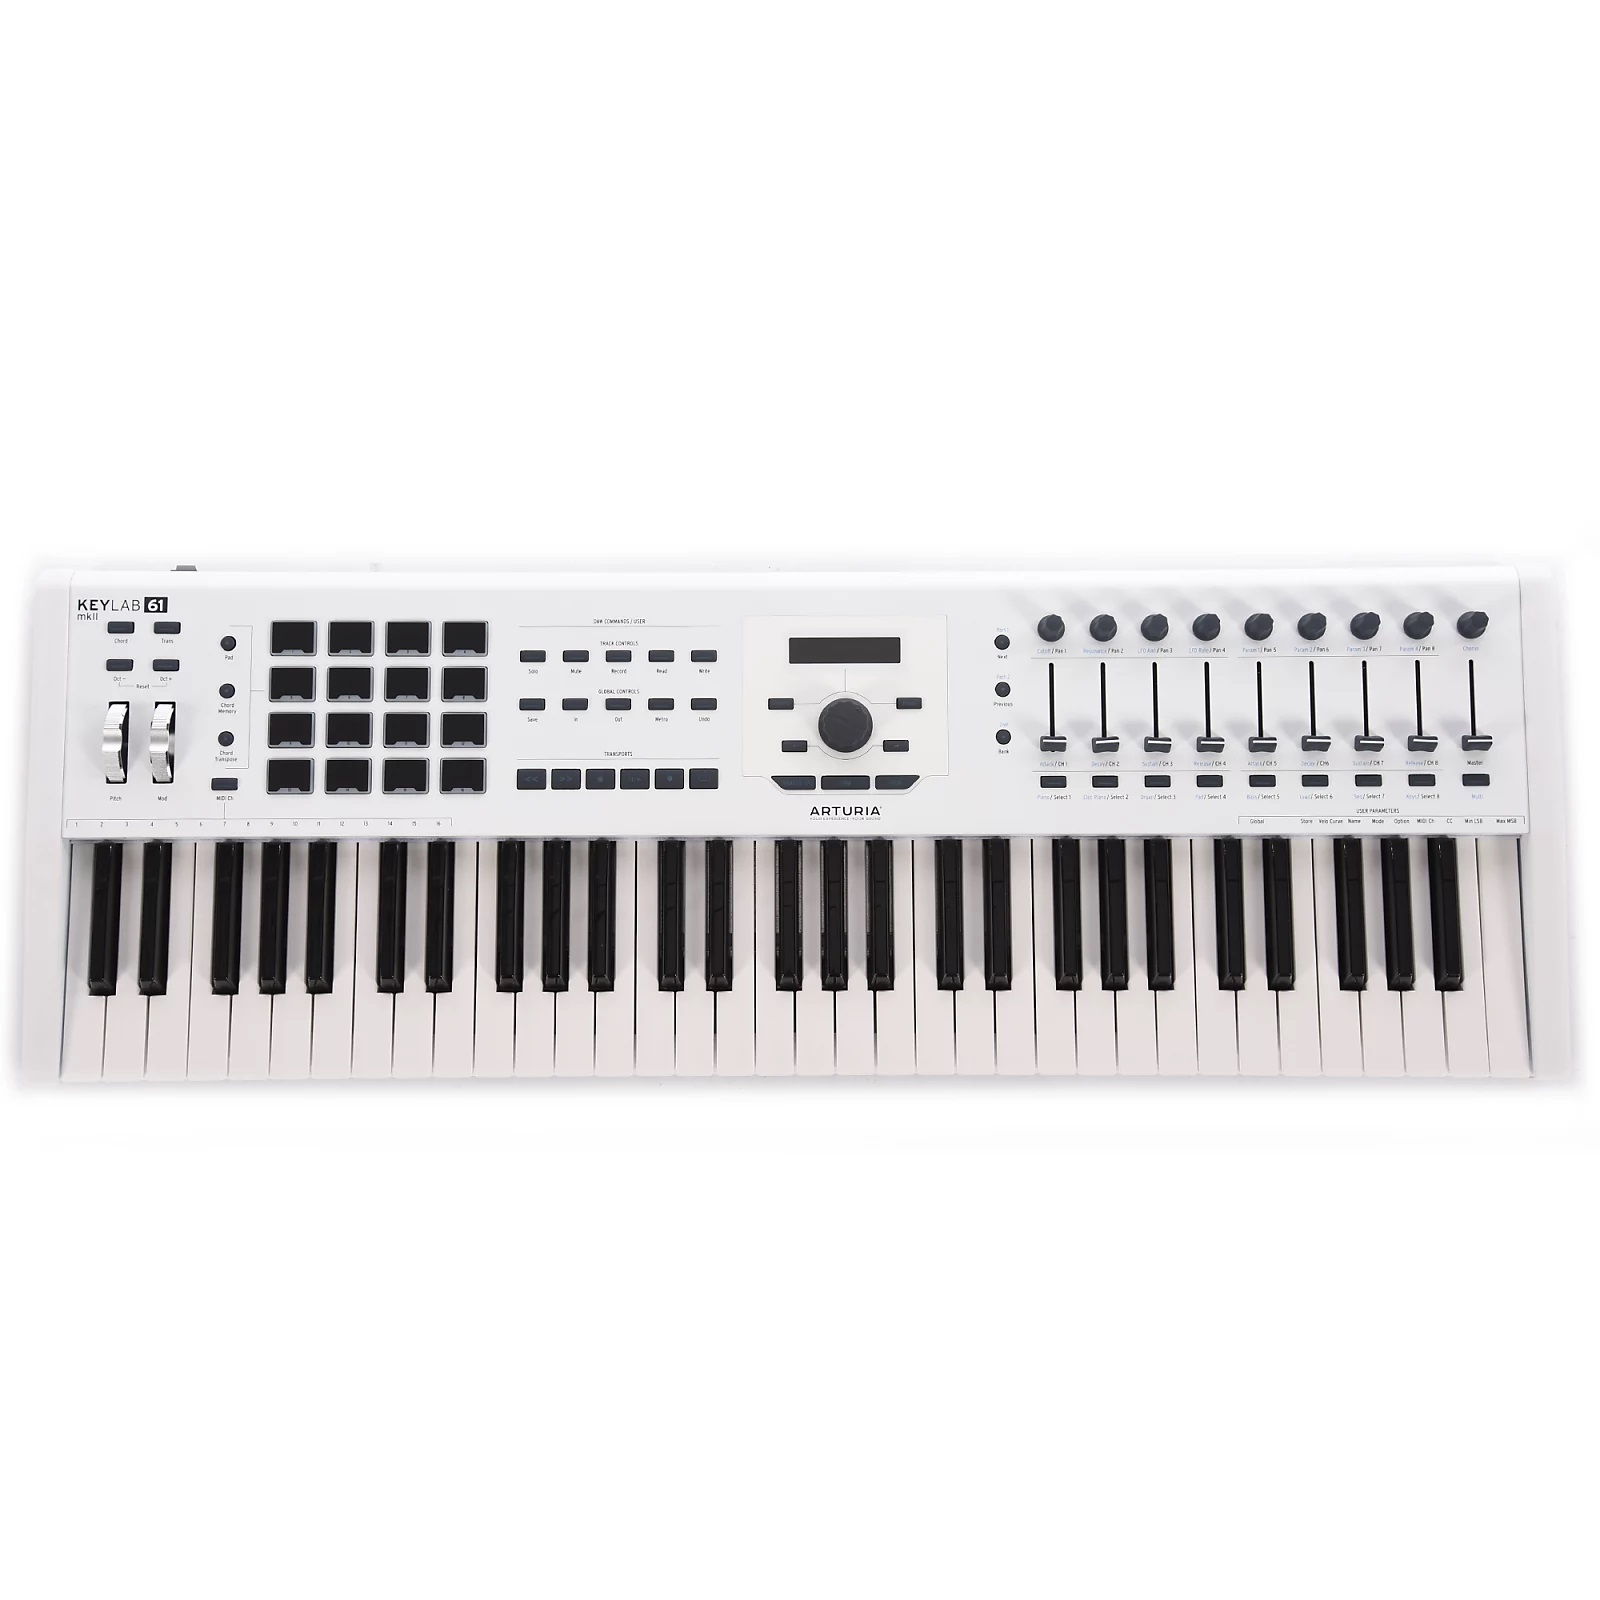 MIDI клавиатуры Arturia KeyLab mkII 61 White контроллер ard classic live 1 5m white 230v 1 6a ardecoled закрытый